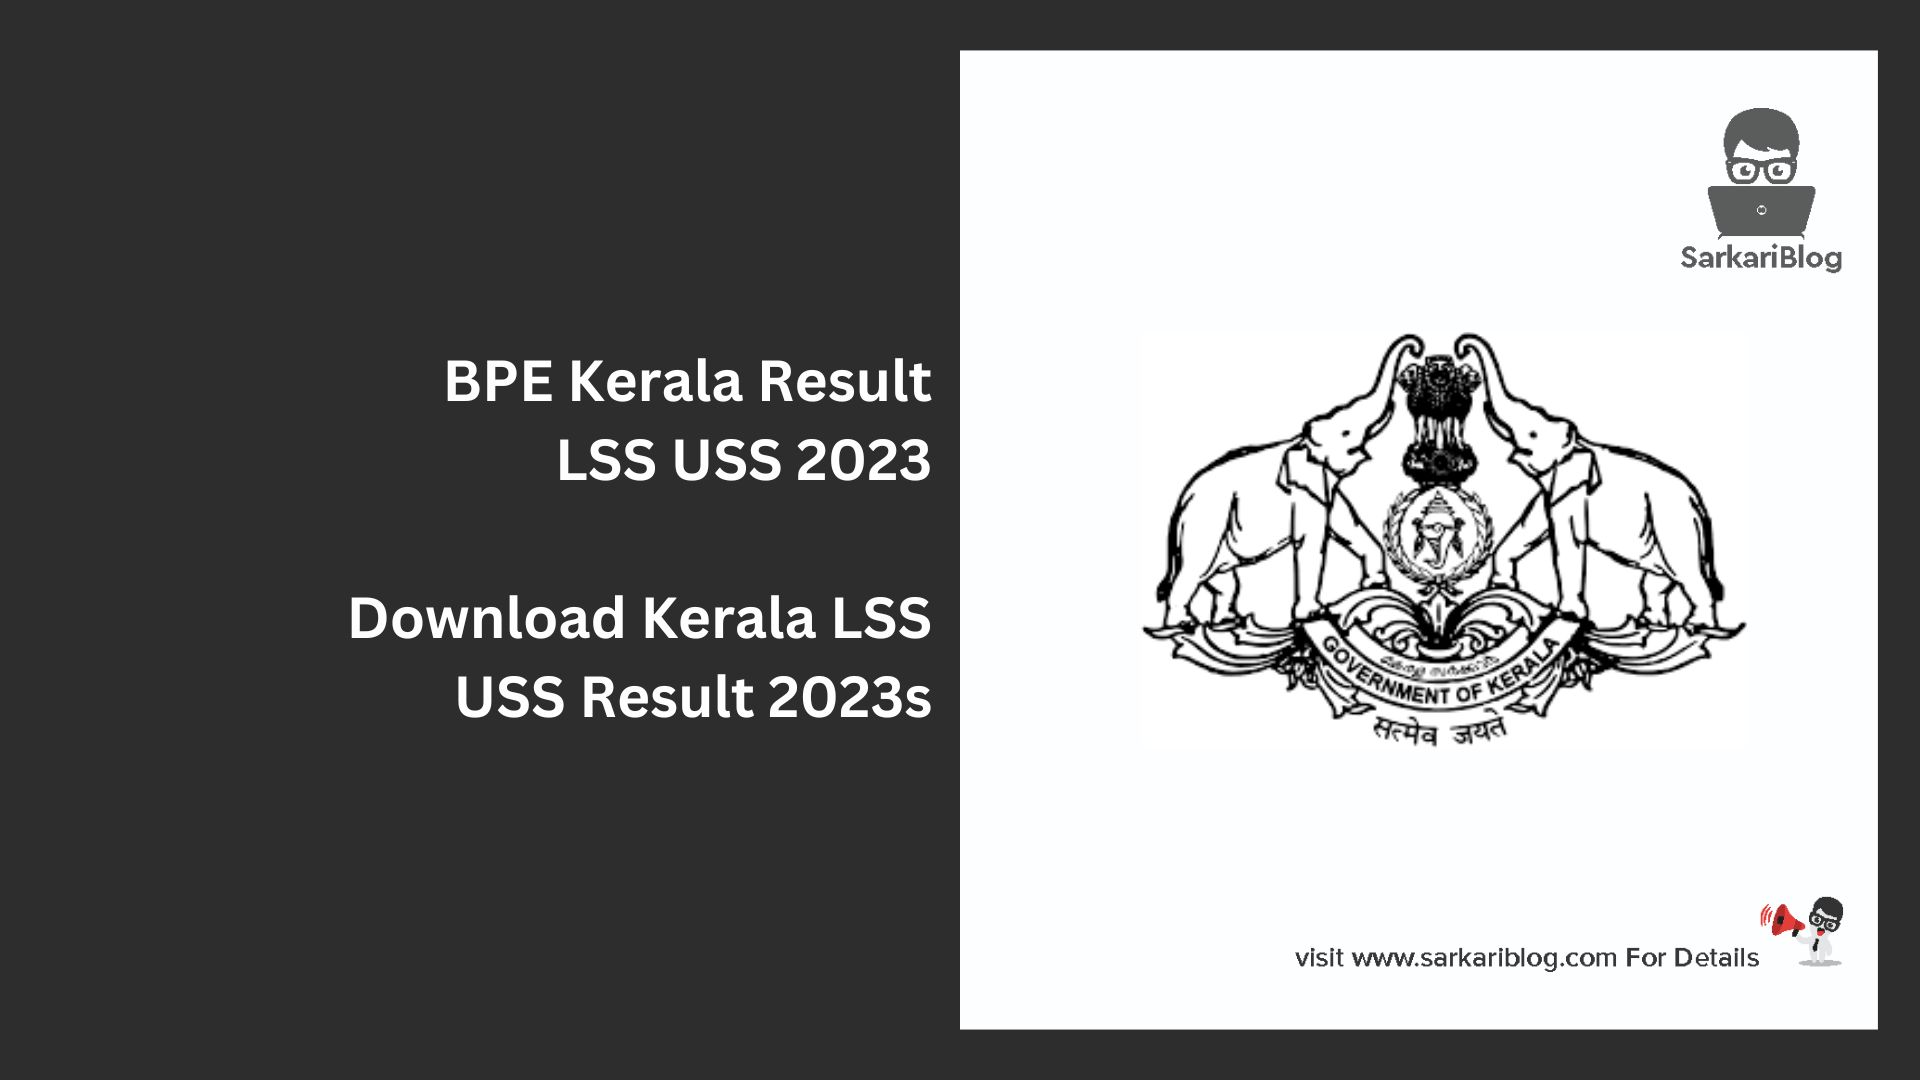 BPE Kerala Result LSS USS 2023